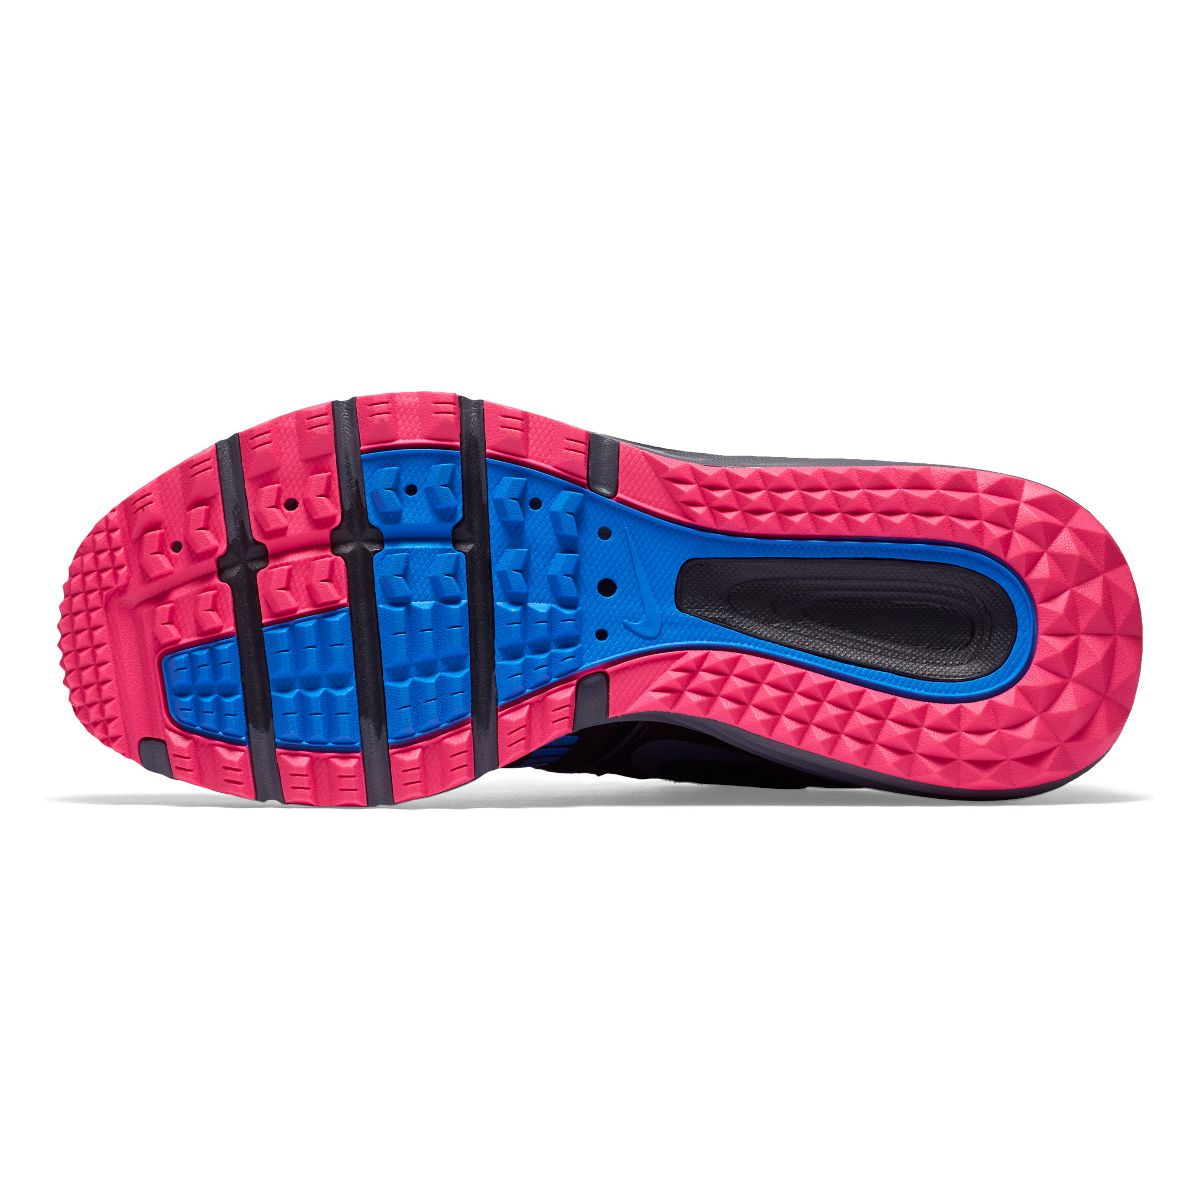 Nike Dual Fusion Trail 2 Women's Trail Running Shoes 819147-